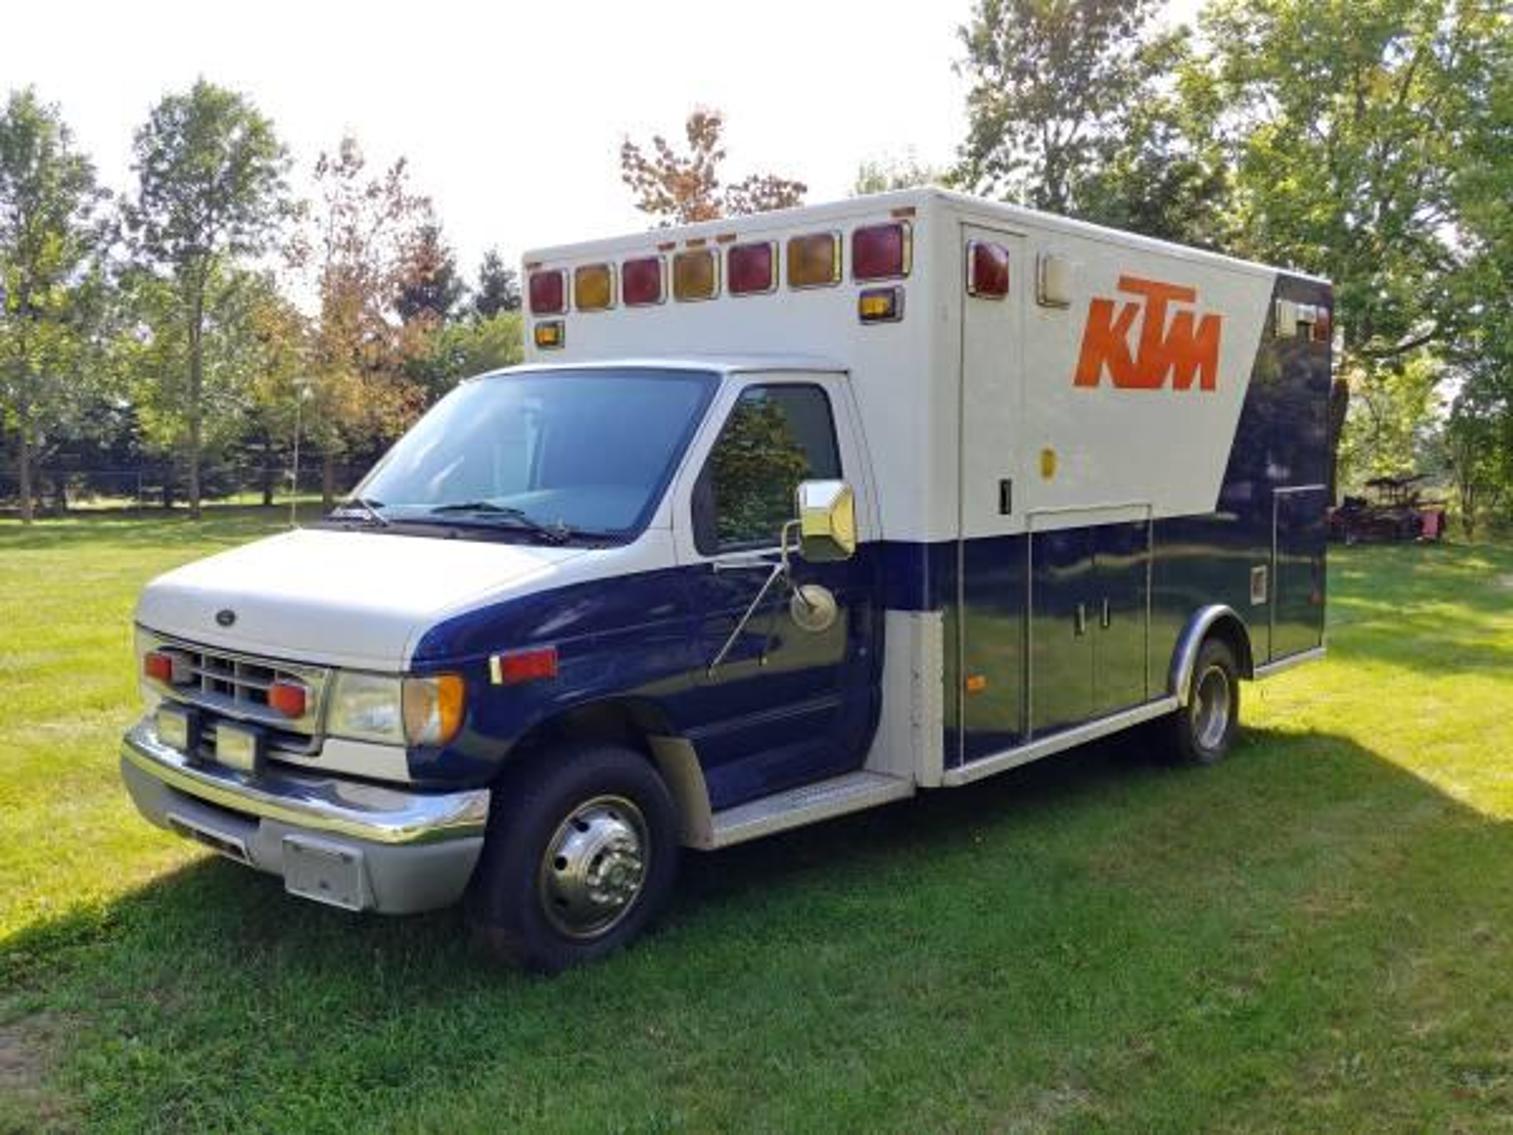 (8) Campers, 2002 Ford E-450 Ambulance & 2008 Infiniti